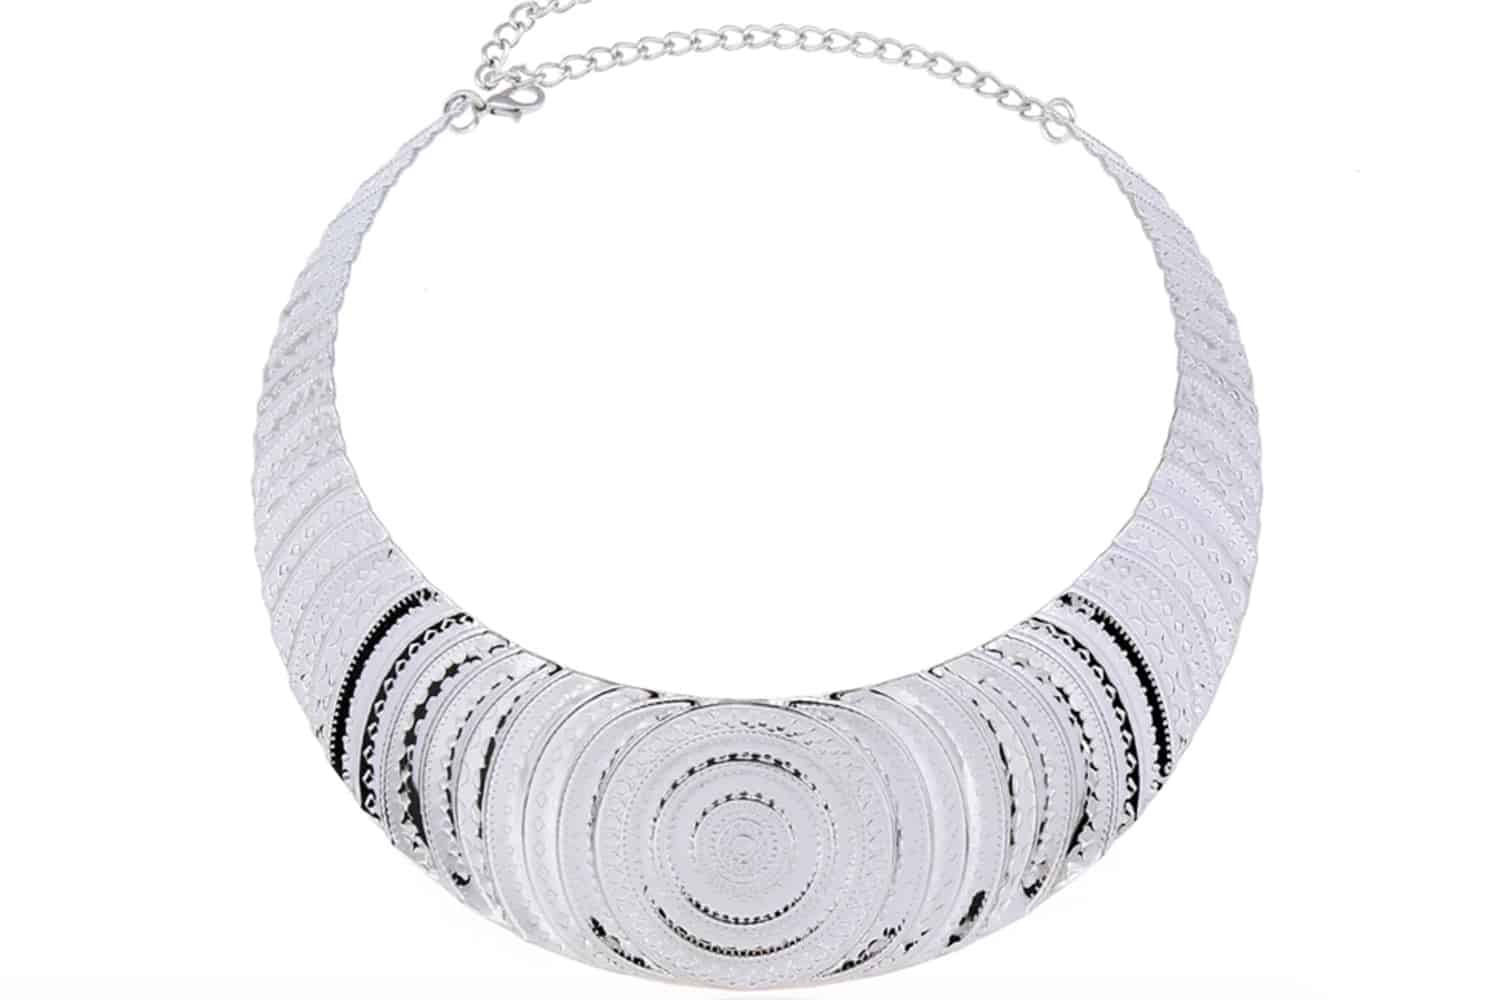 Necklace Metal Base “Circles” Pattern - Silver, 14cm (23373)